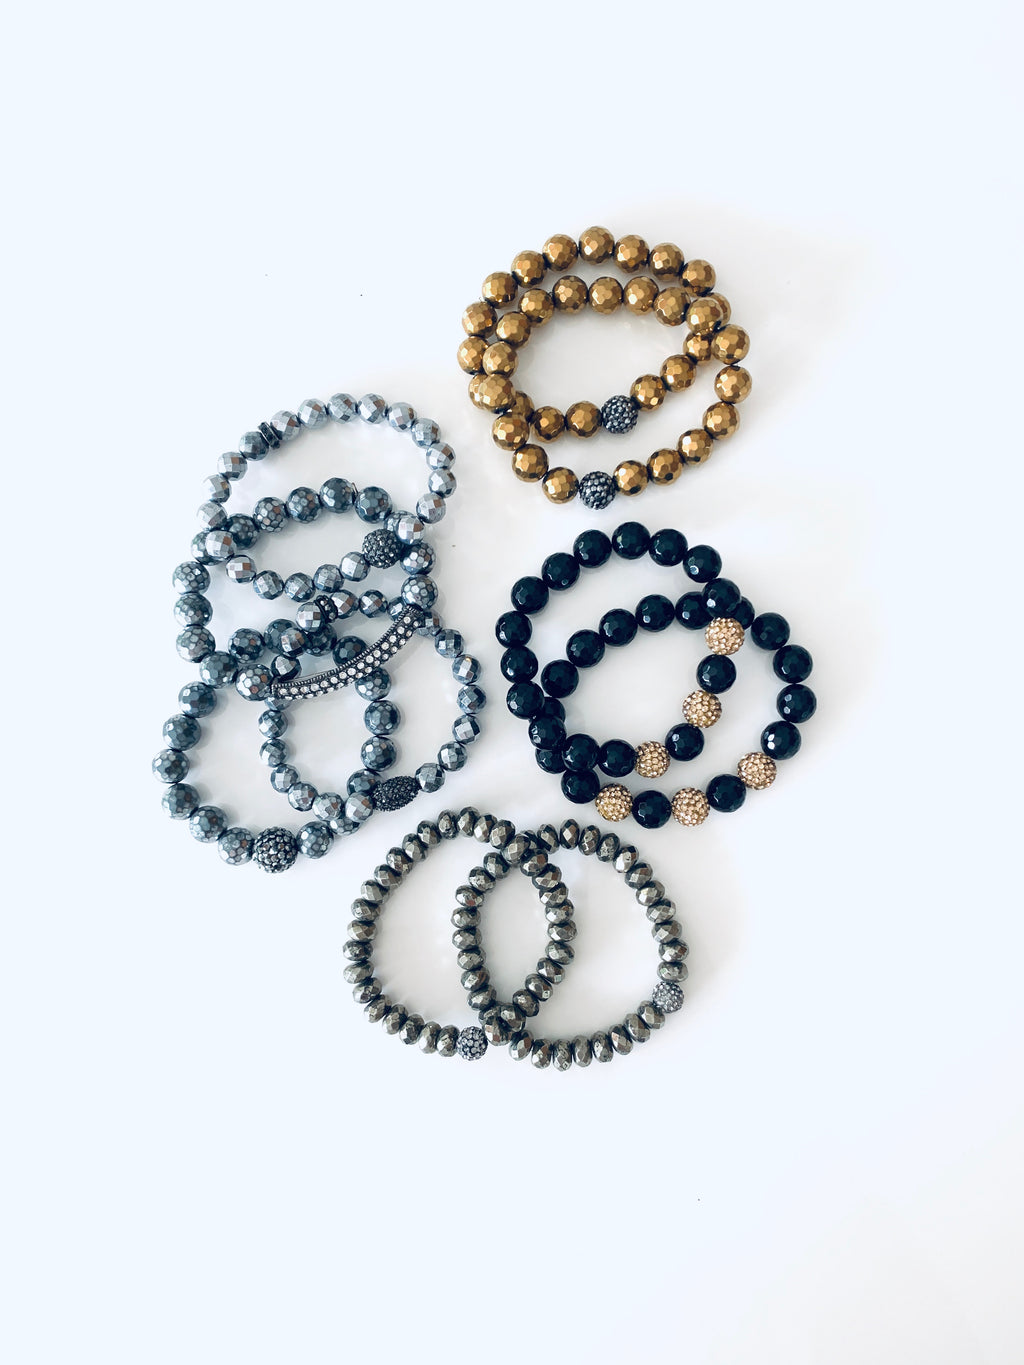 Black Onyx Beads And Pave Gold Ball Bracelet